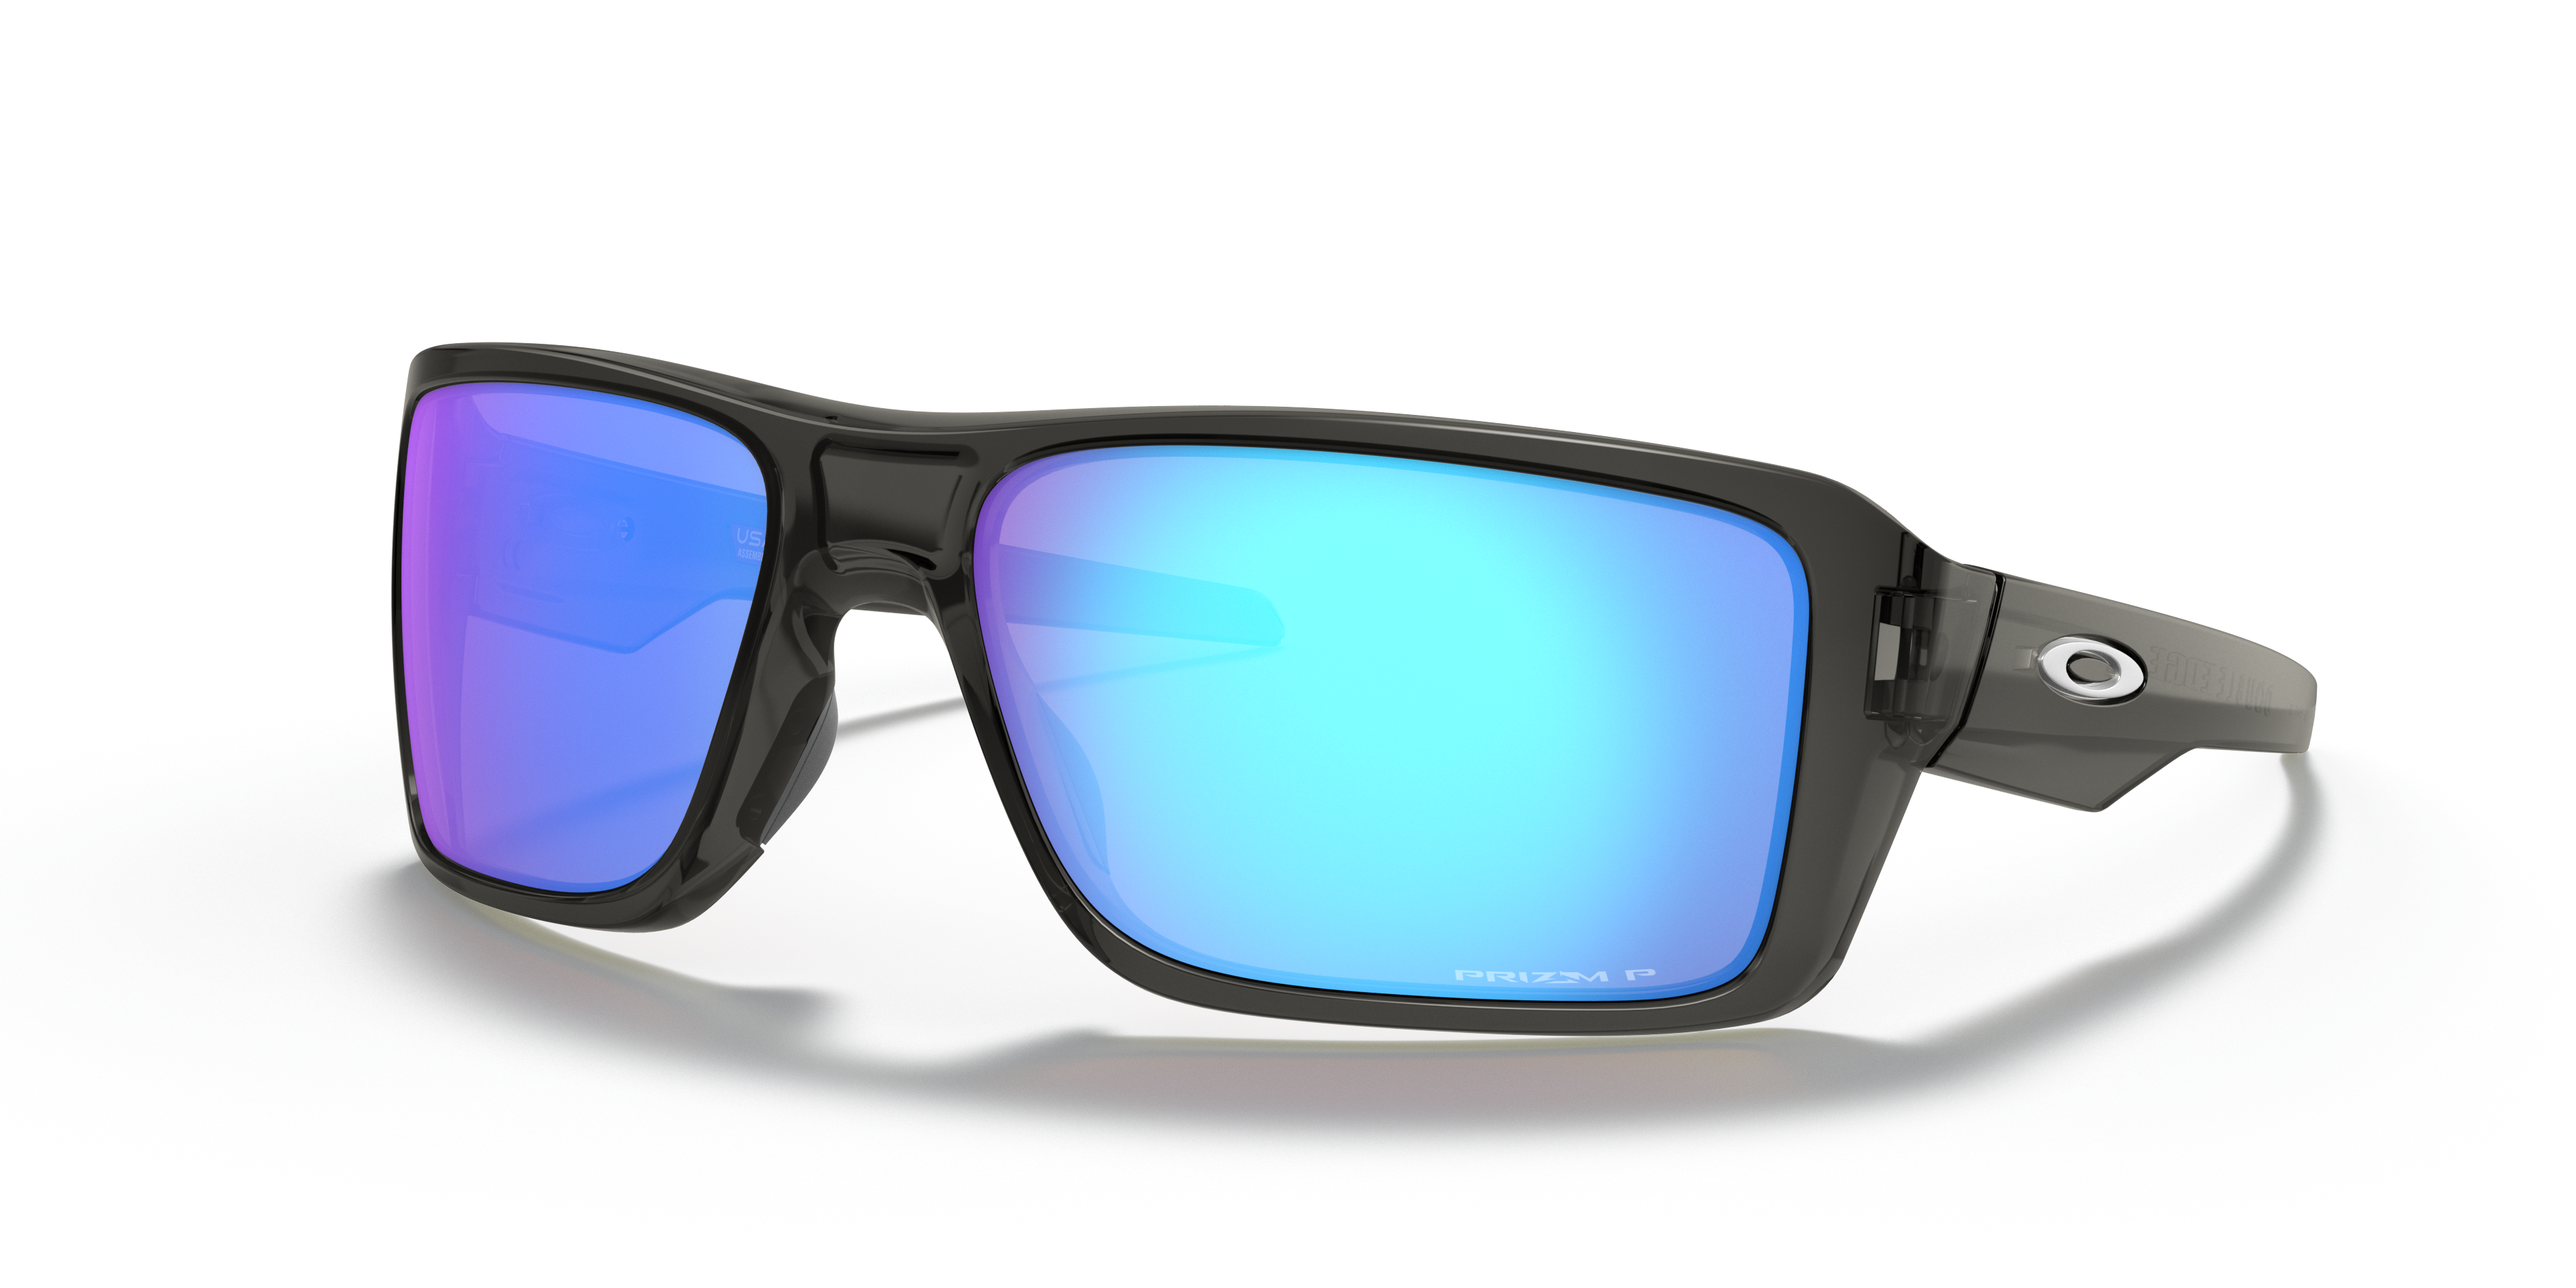 mens custom oakley sunglasses White With Blue Lenses 2 Soft Cases And Hard Case